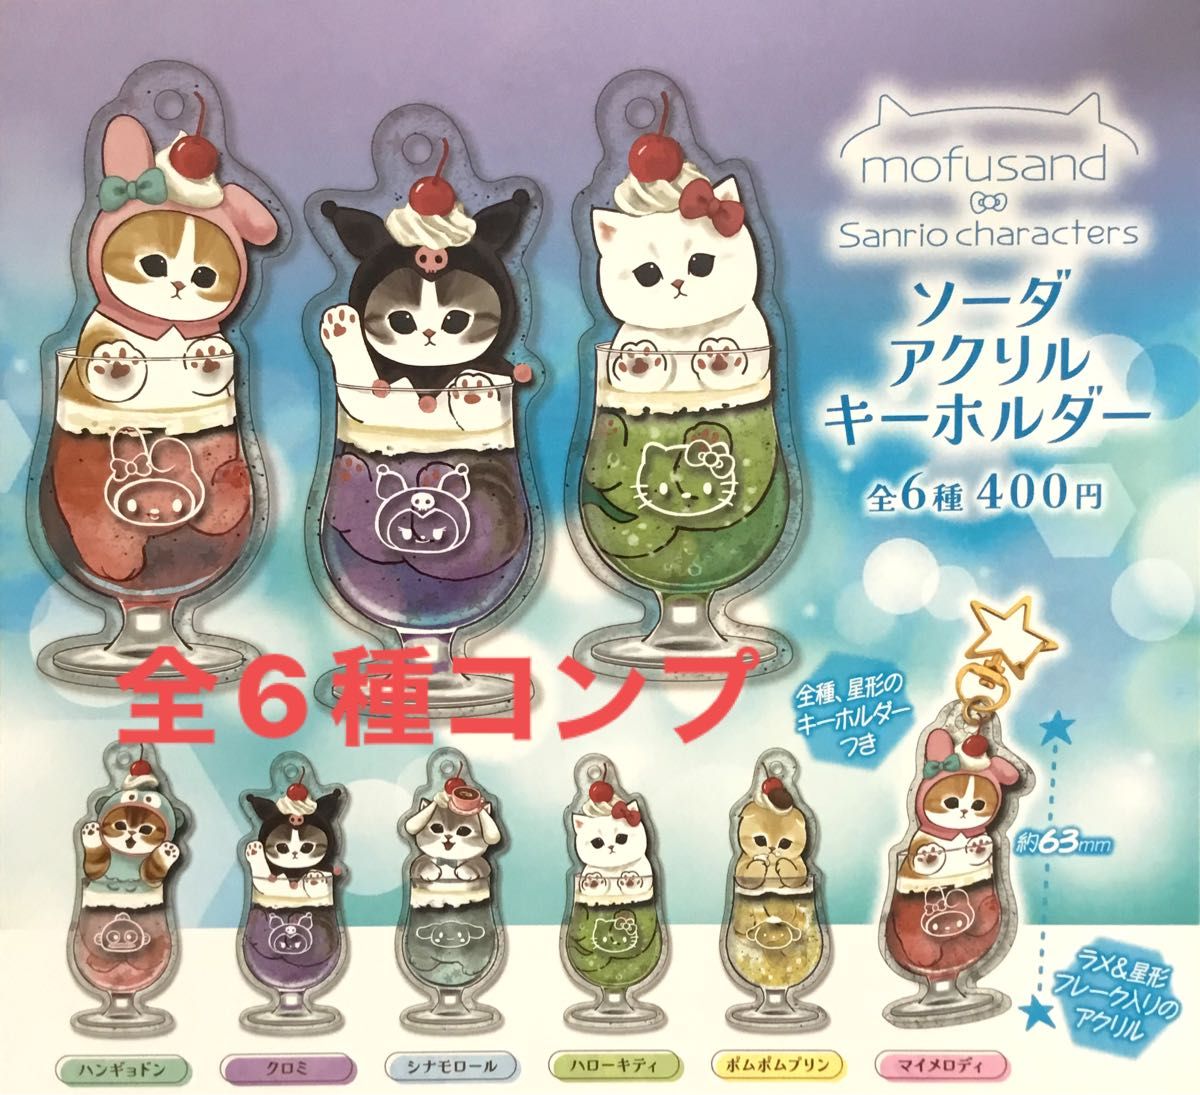 mofusand Sanrio charactersソーダアクリルキーホルダー 全6種